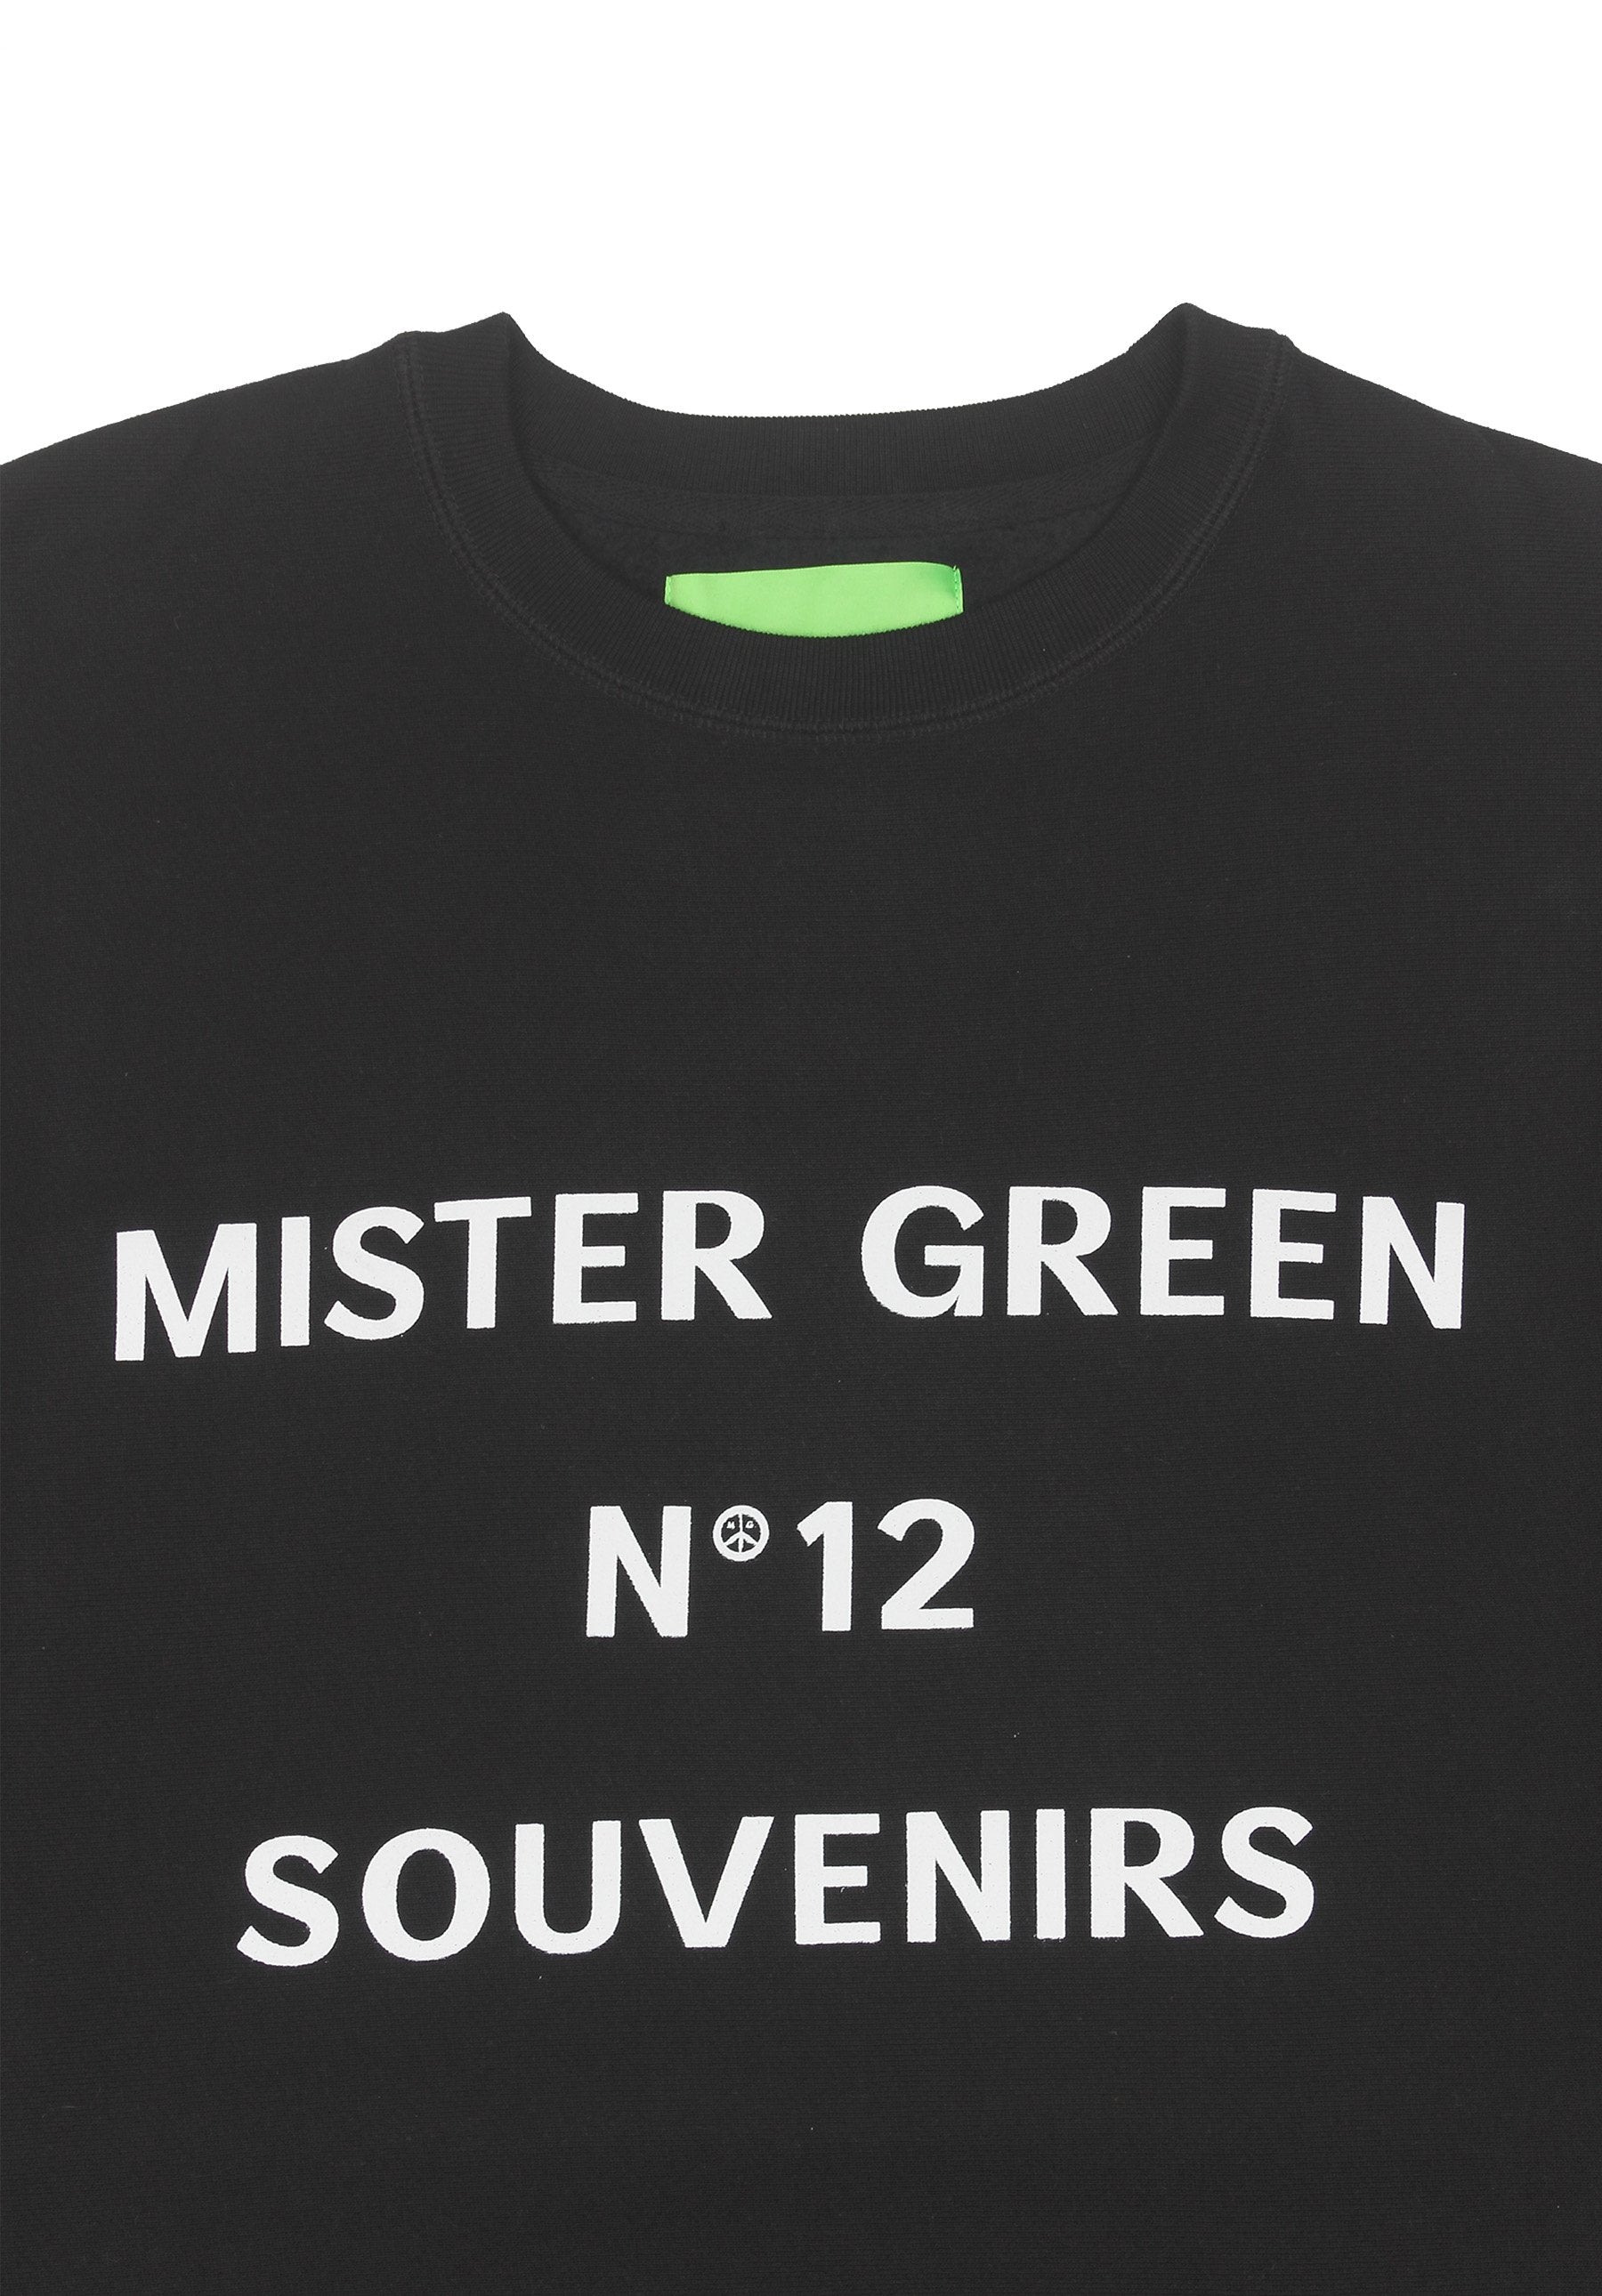 No. 12 Souvenirs Crewneck - Black-Mister Green-Mister Green